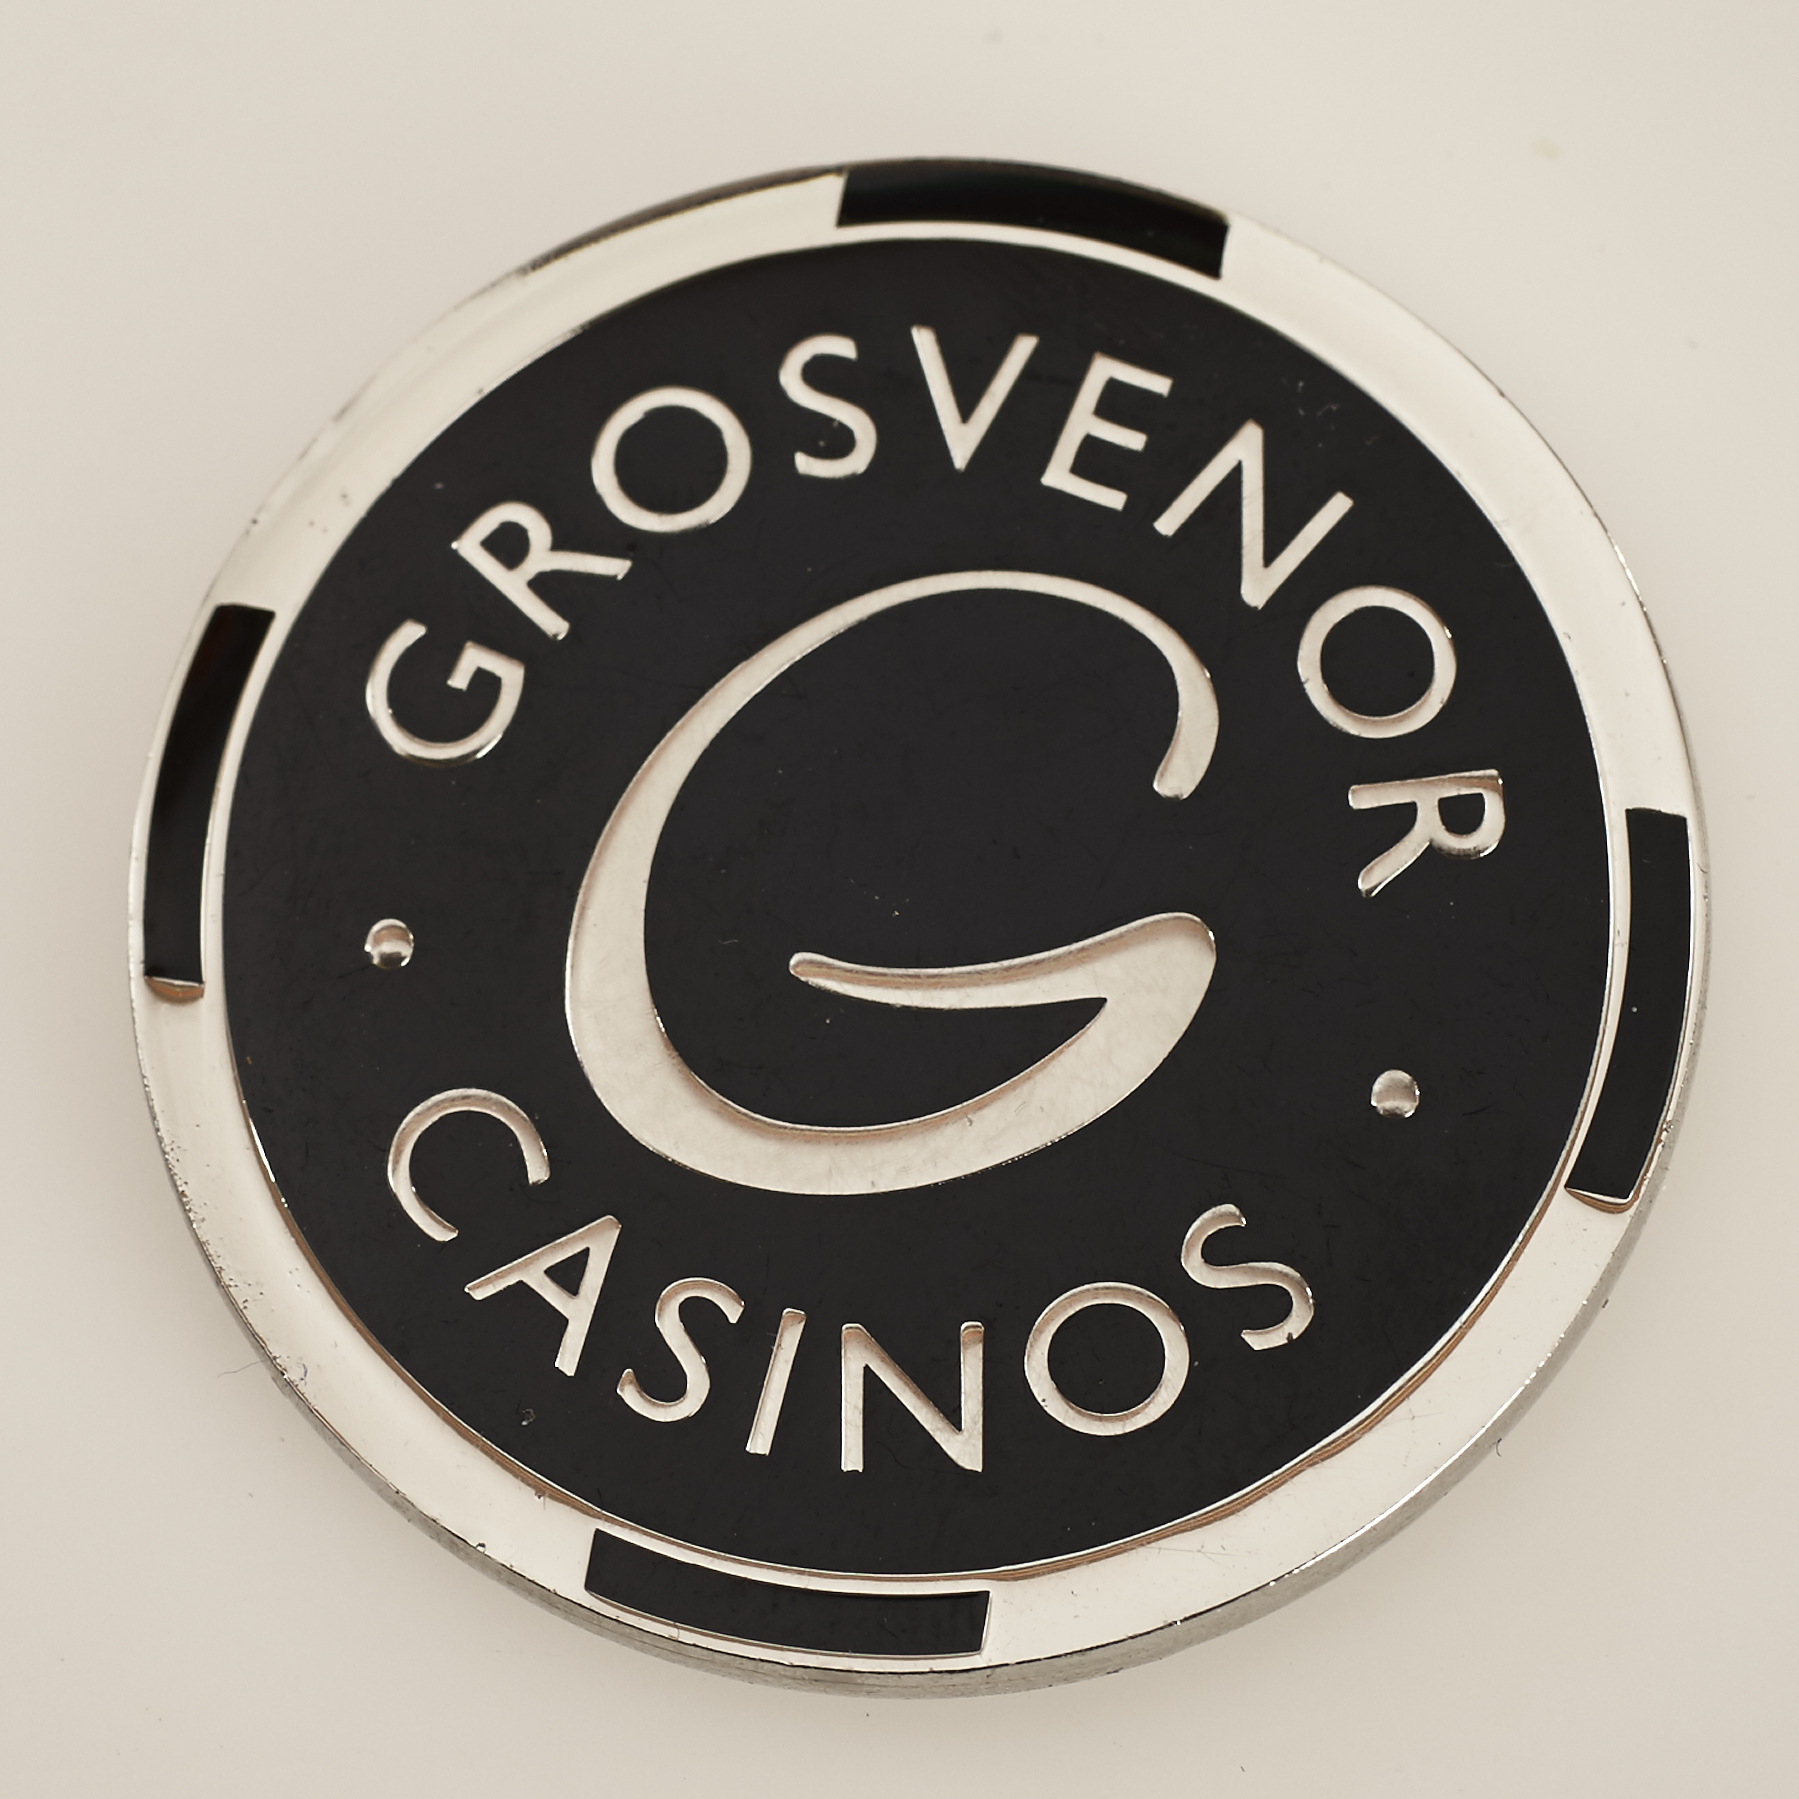 GROSVENOR CASINOS, I TOOK ON GOLIATH 2015, Poker Card Guard